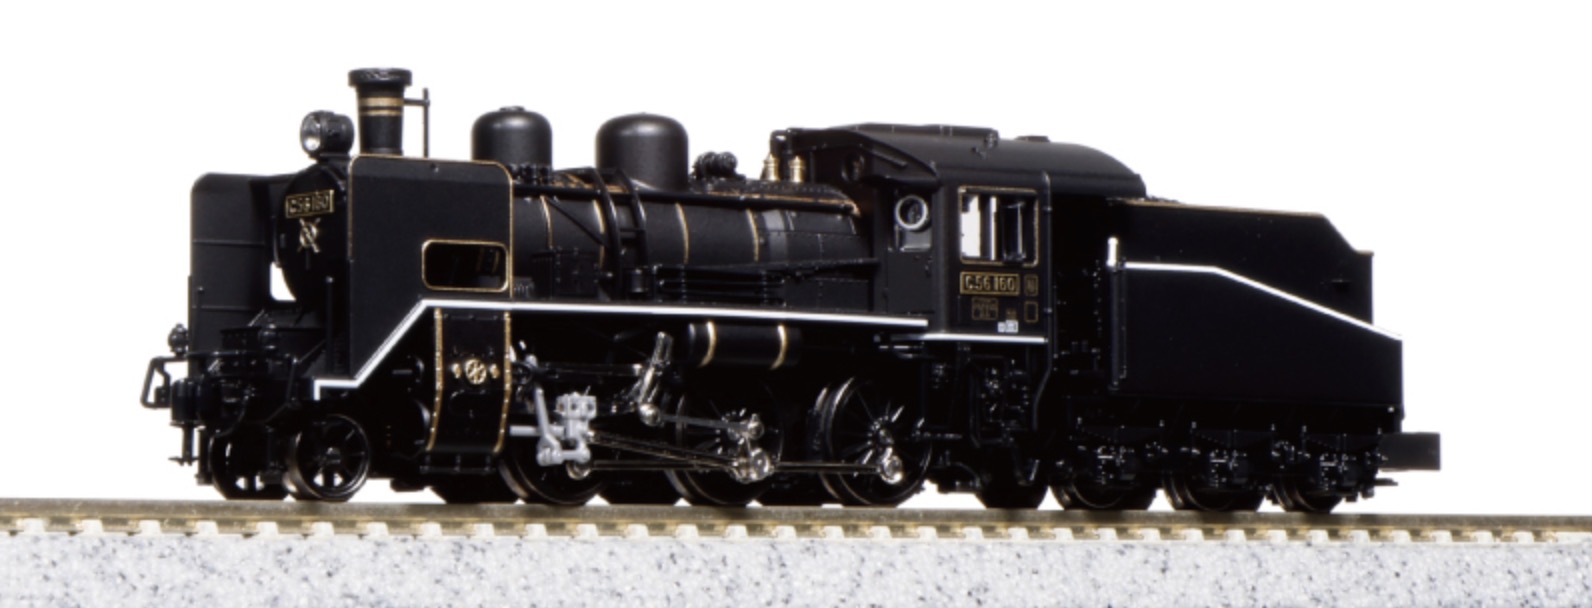 N Scale - Kato - 2020-2 - Locomotive, Steam, 2-6-0, C56 - Japan Railways West - C56 160